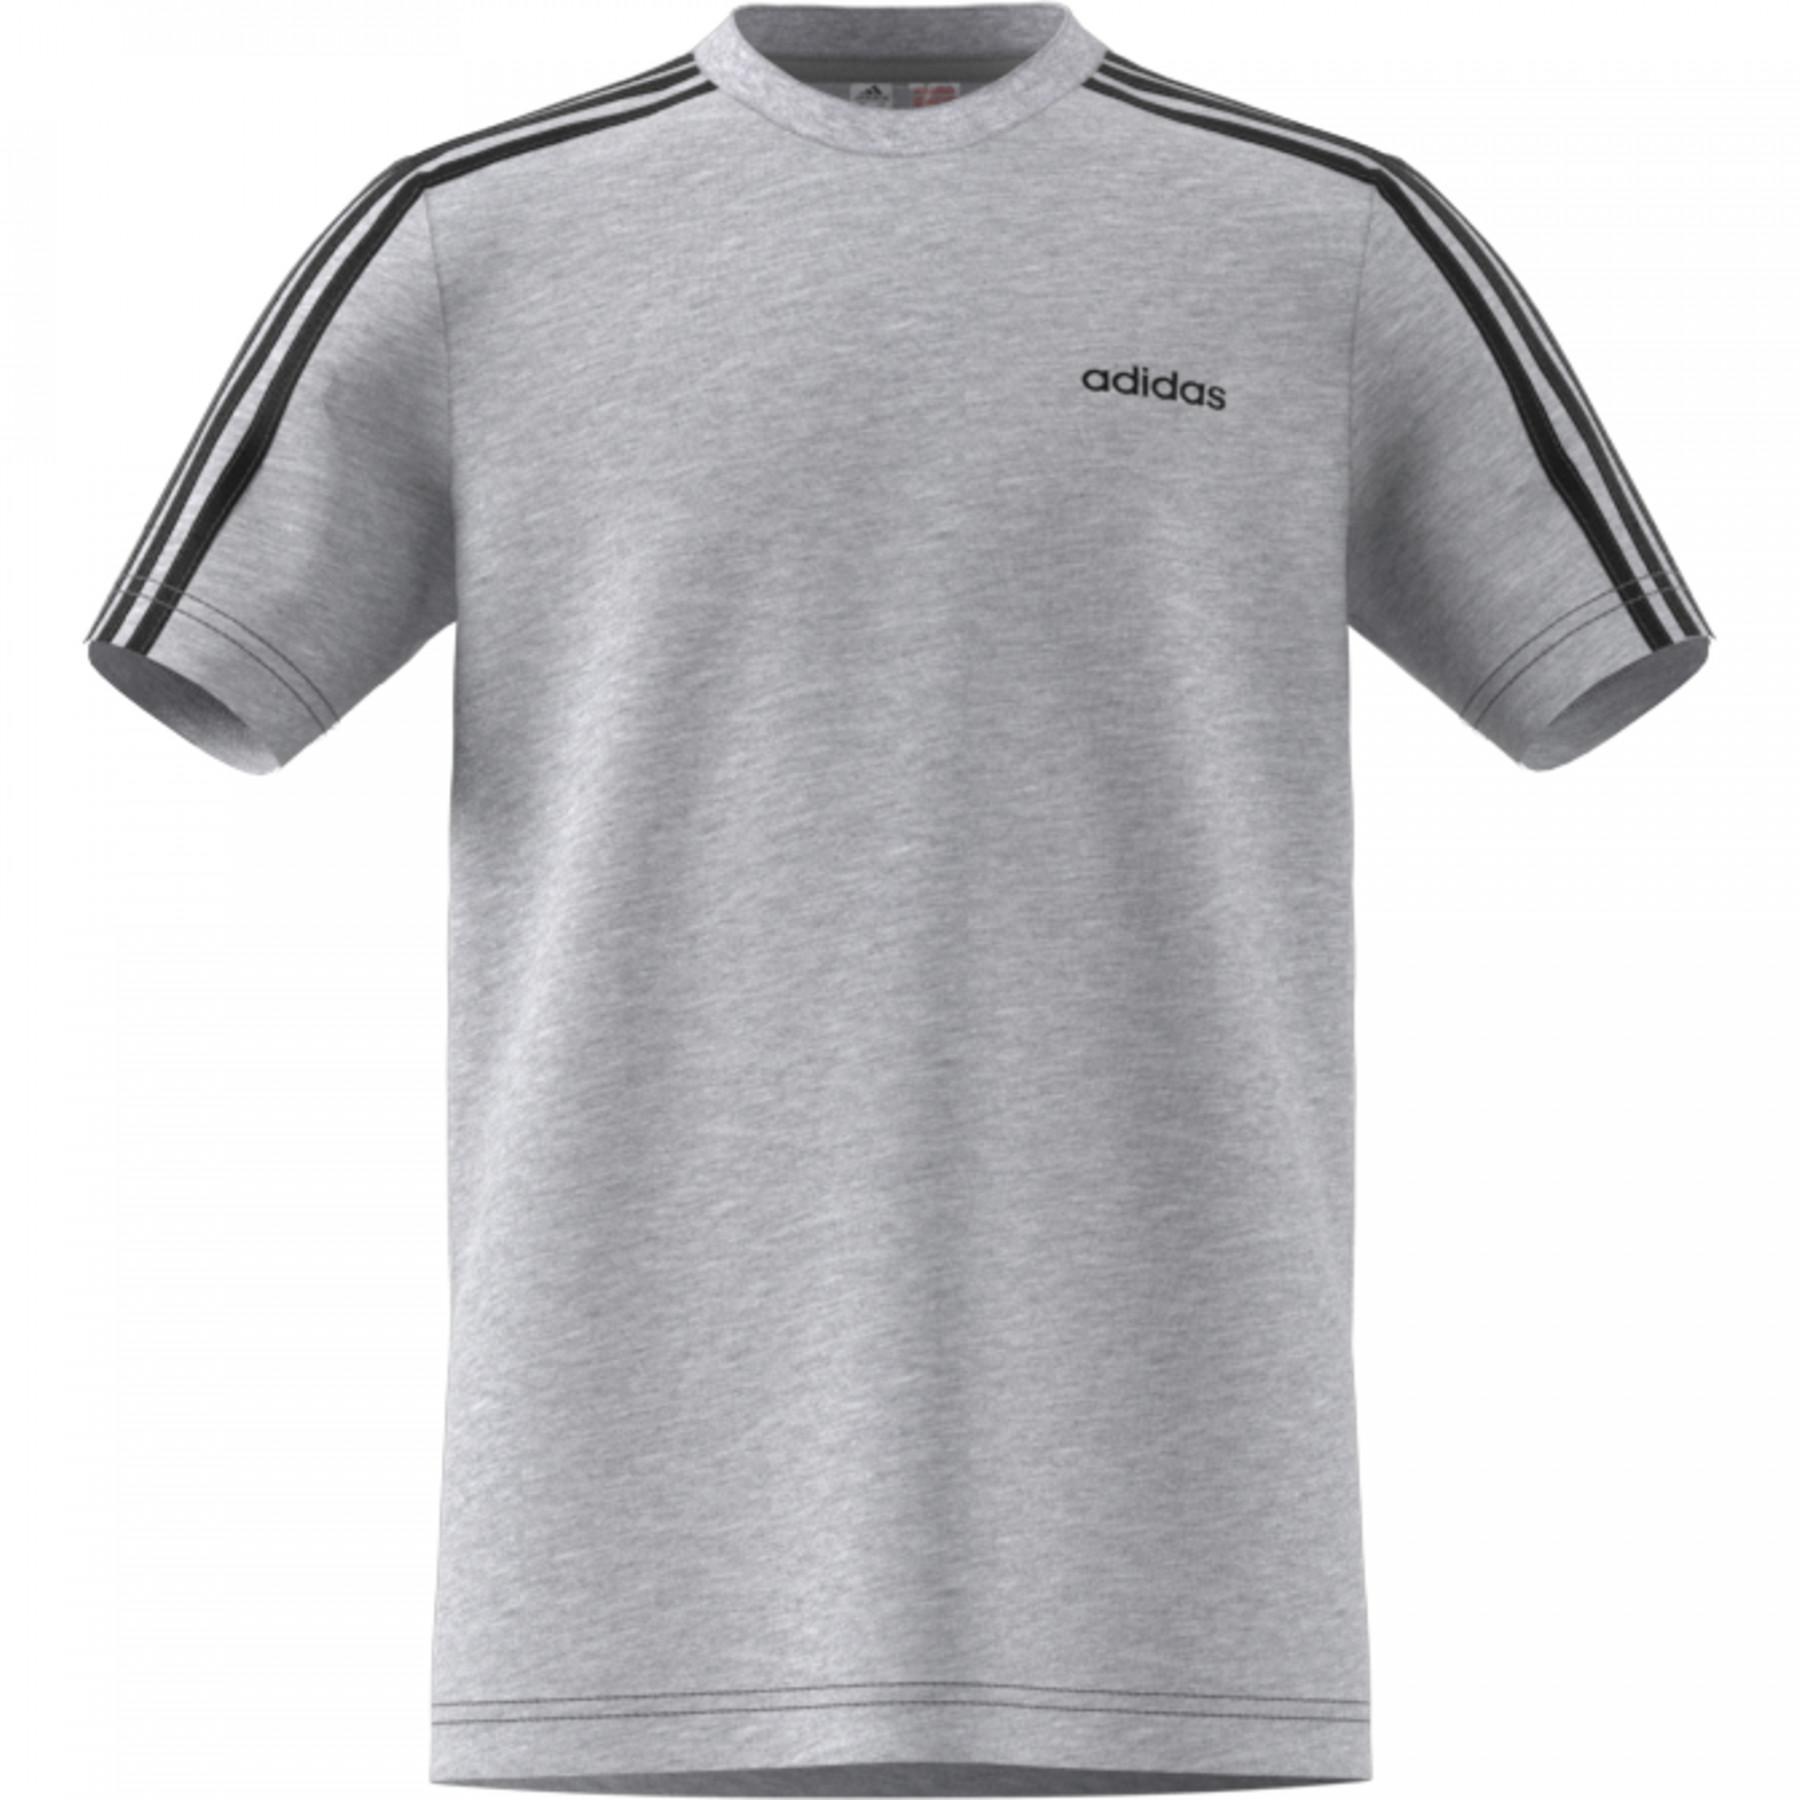 Kinder-T-Shirt adidas Essentials 3-Stripes